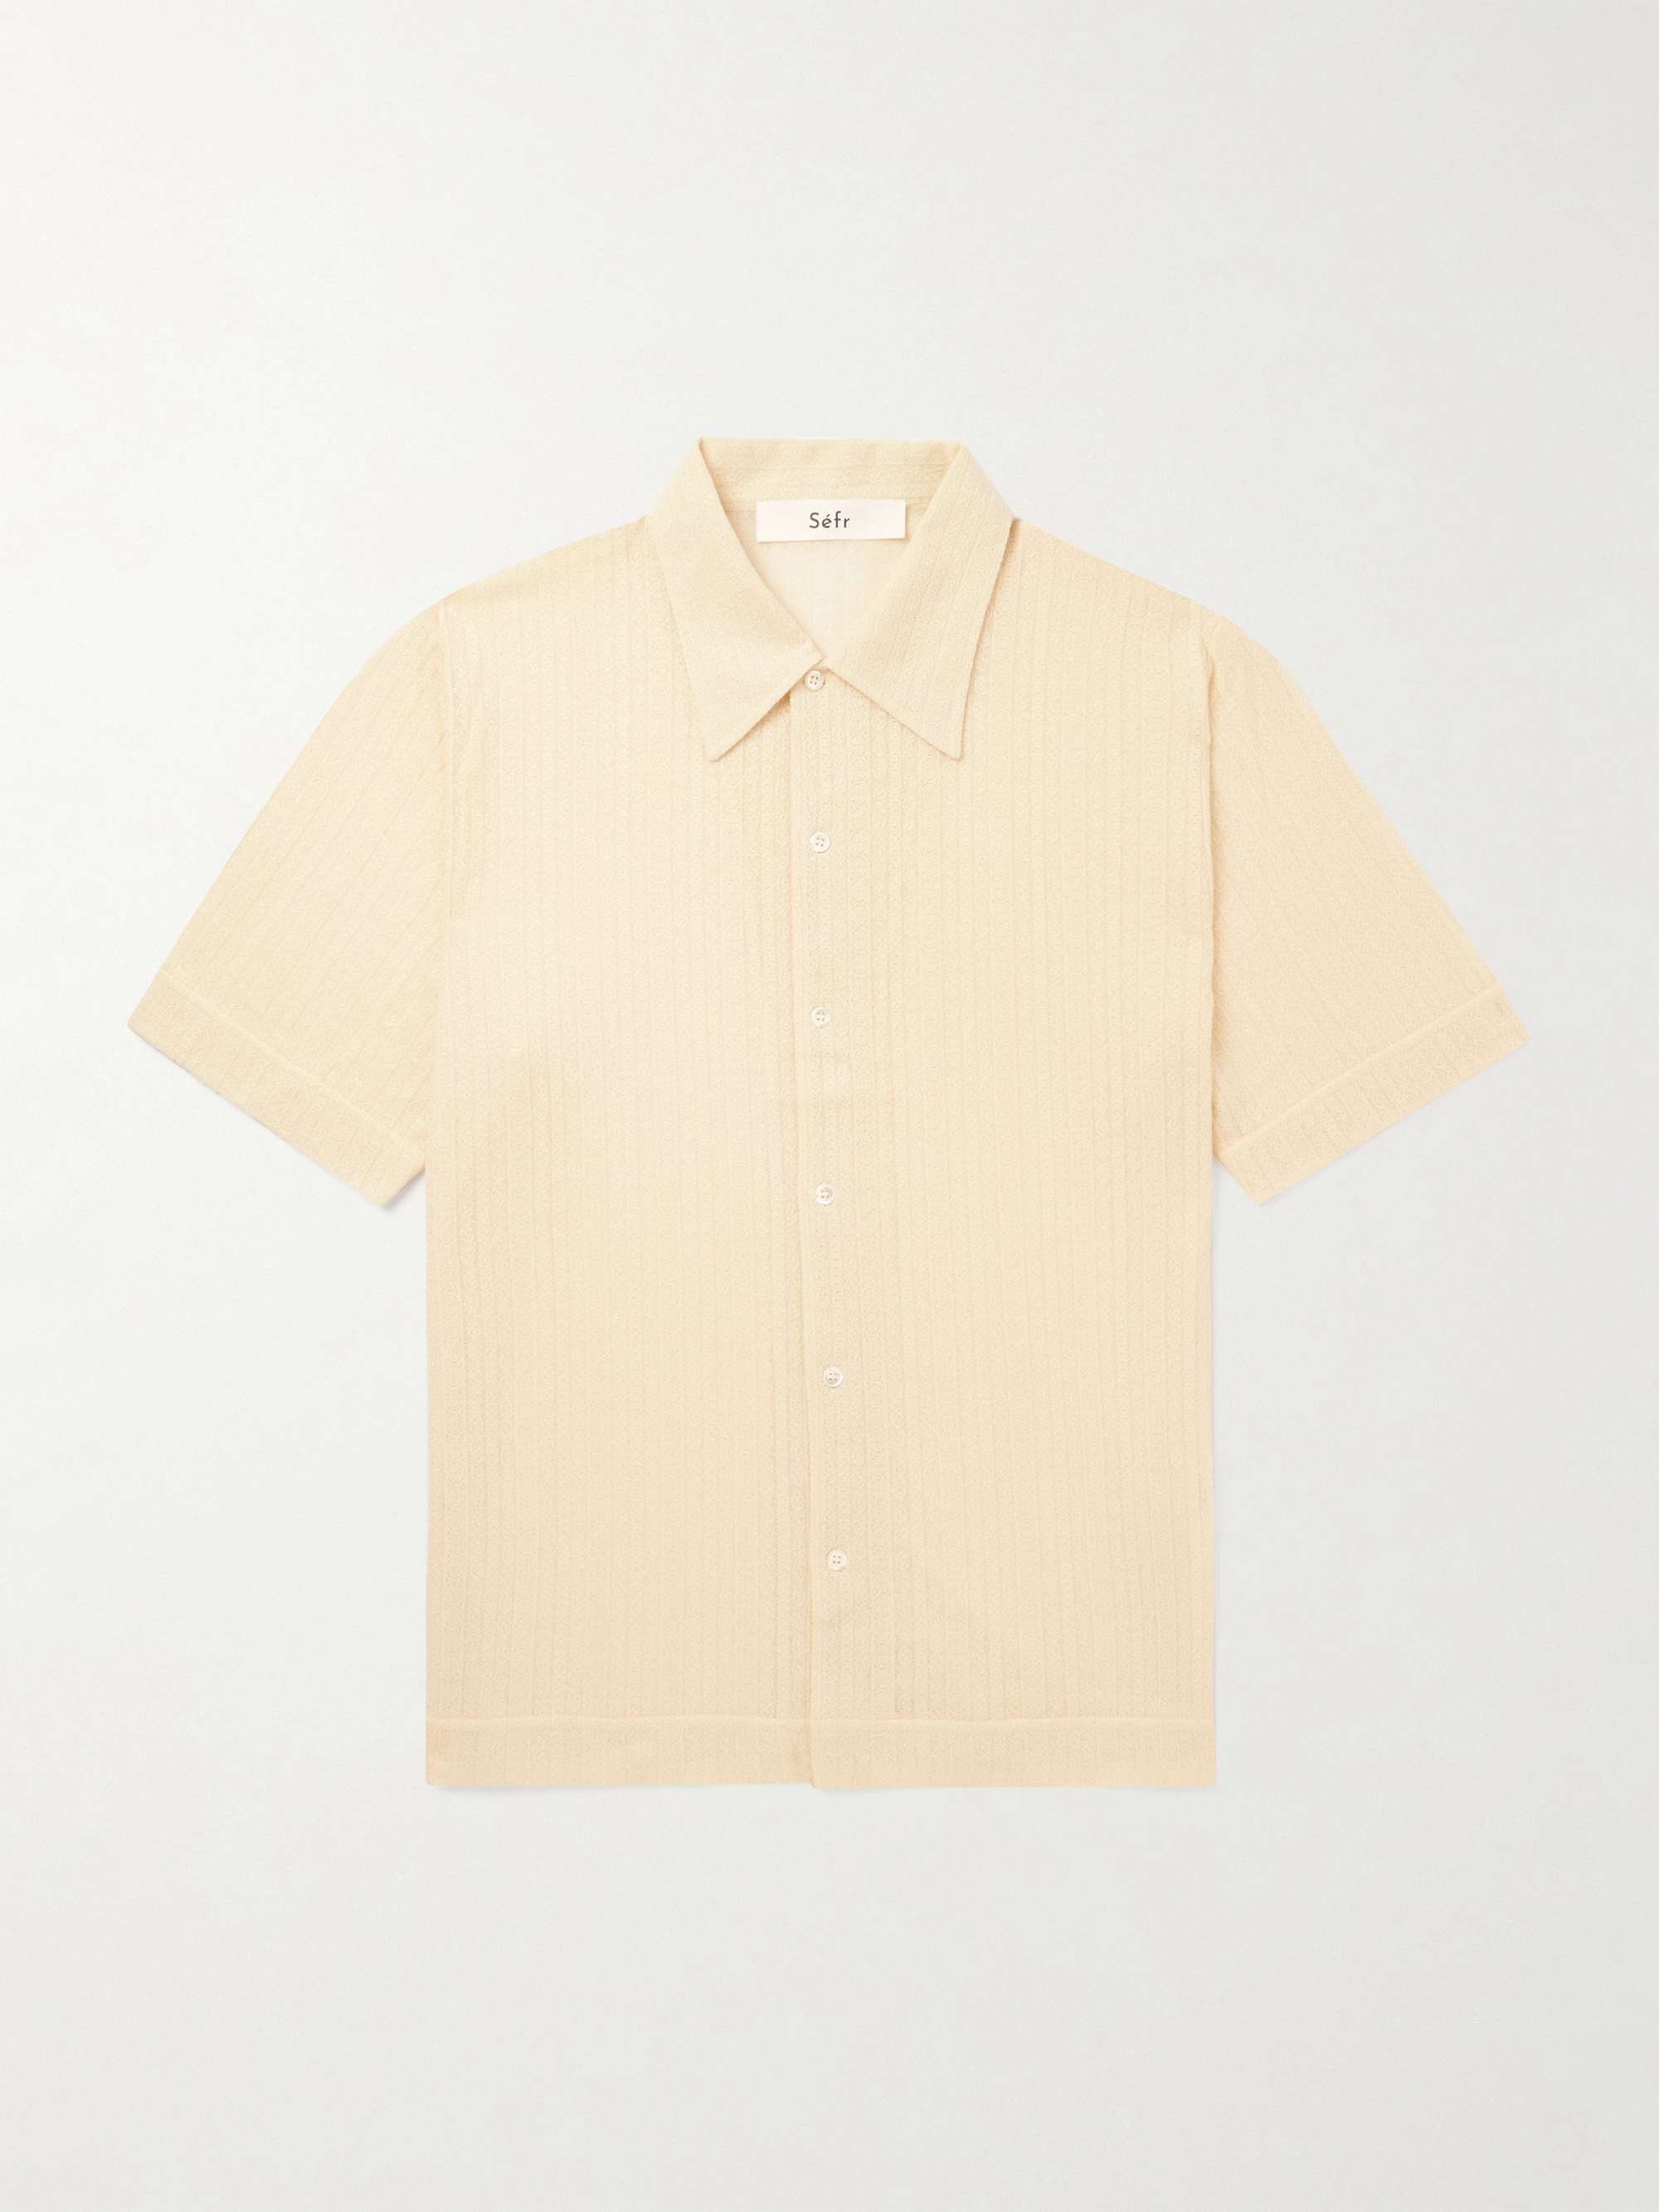 Yellow Suneham Organic Cotton-Blend Jacquard Shirt | SÉFR | MR PORTER